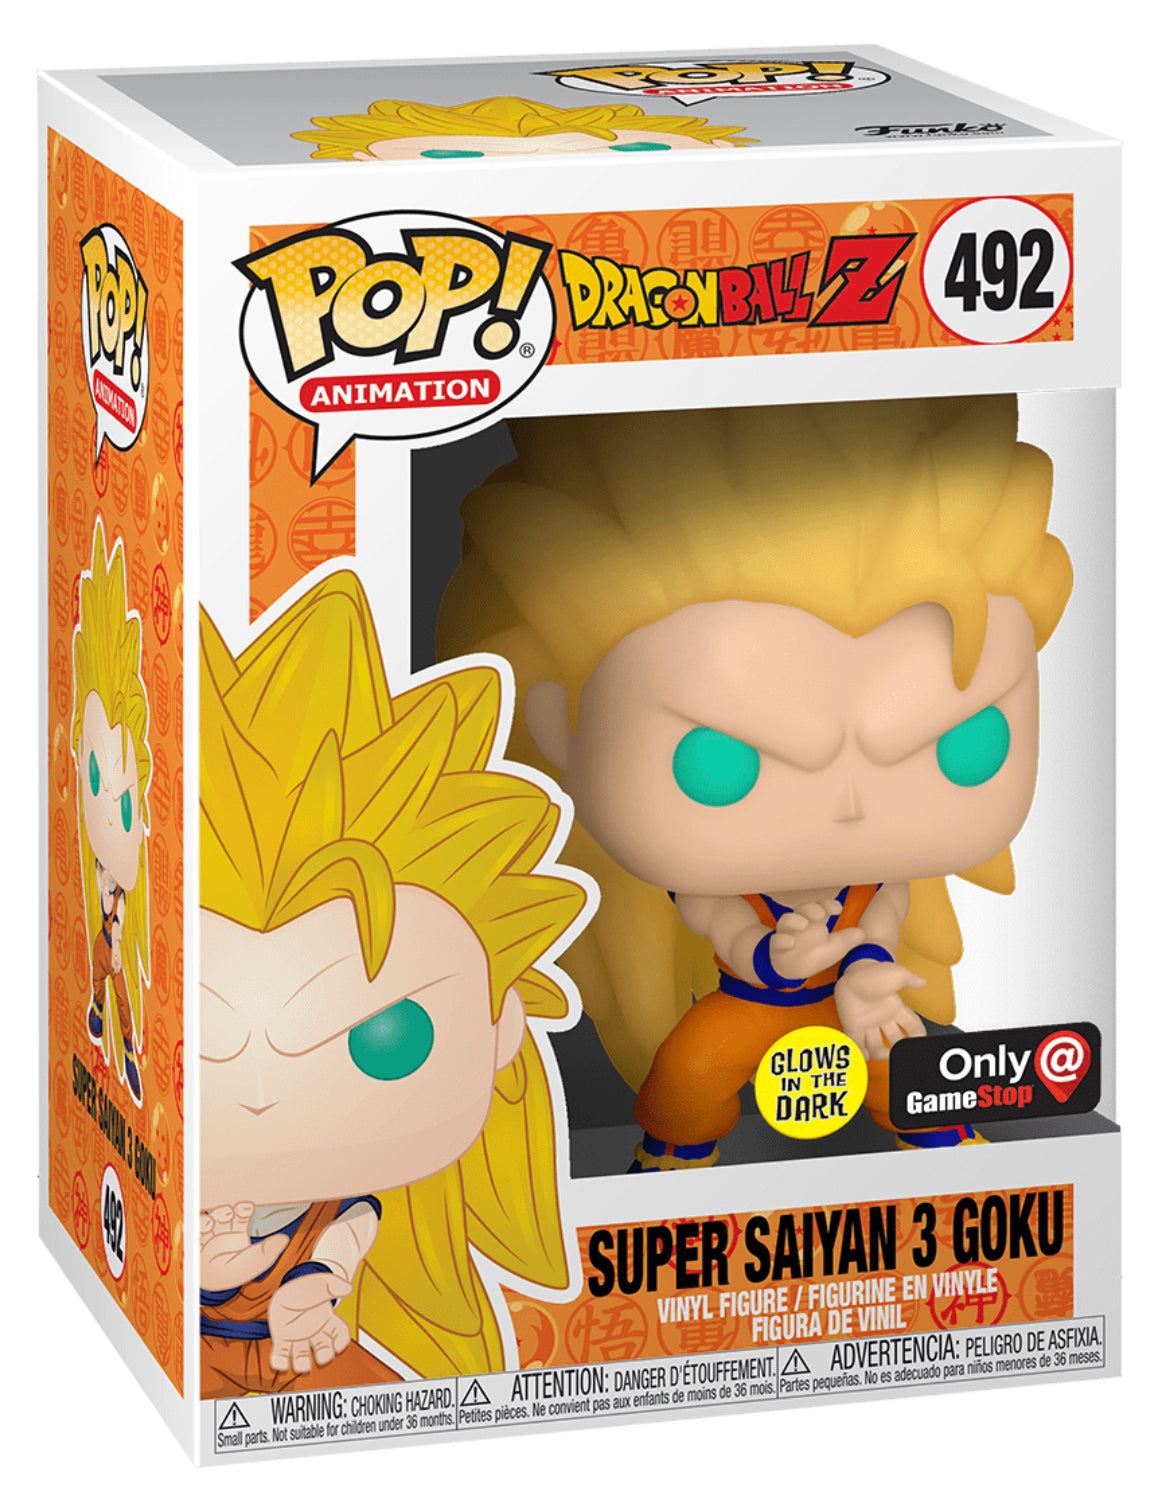 Super Saiyan 3 Goku #492 - Dragon Ball Z Pop! Animation [GameStop Excl